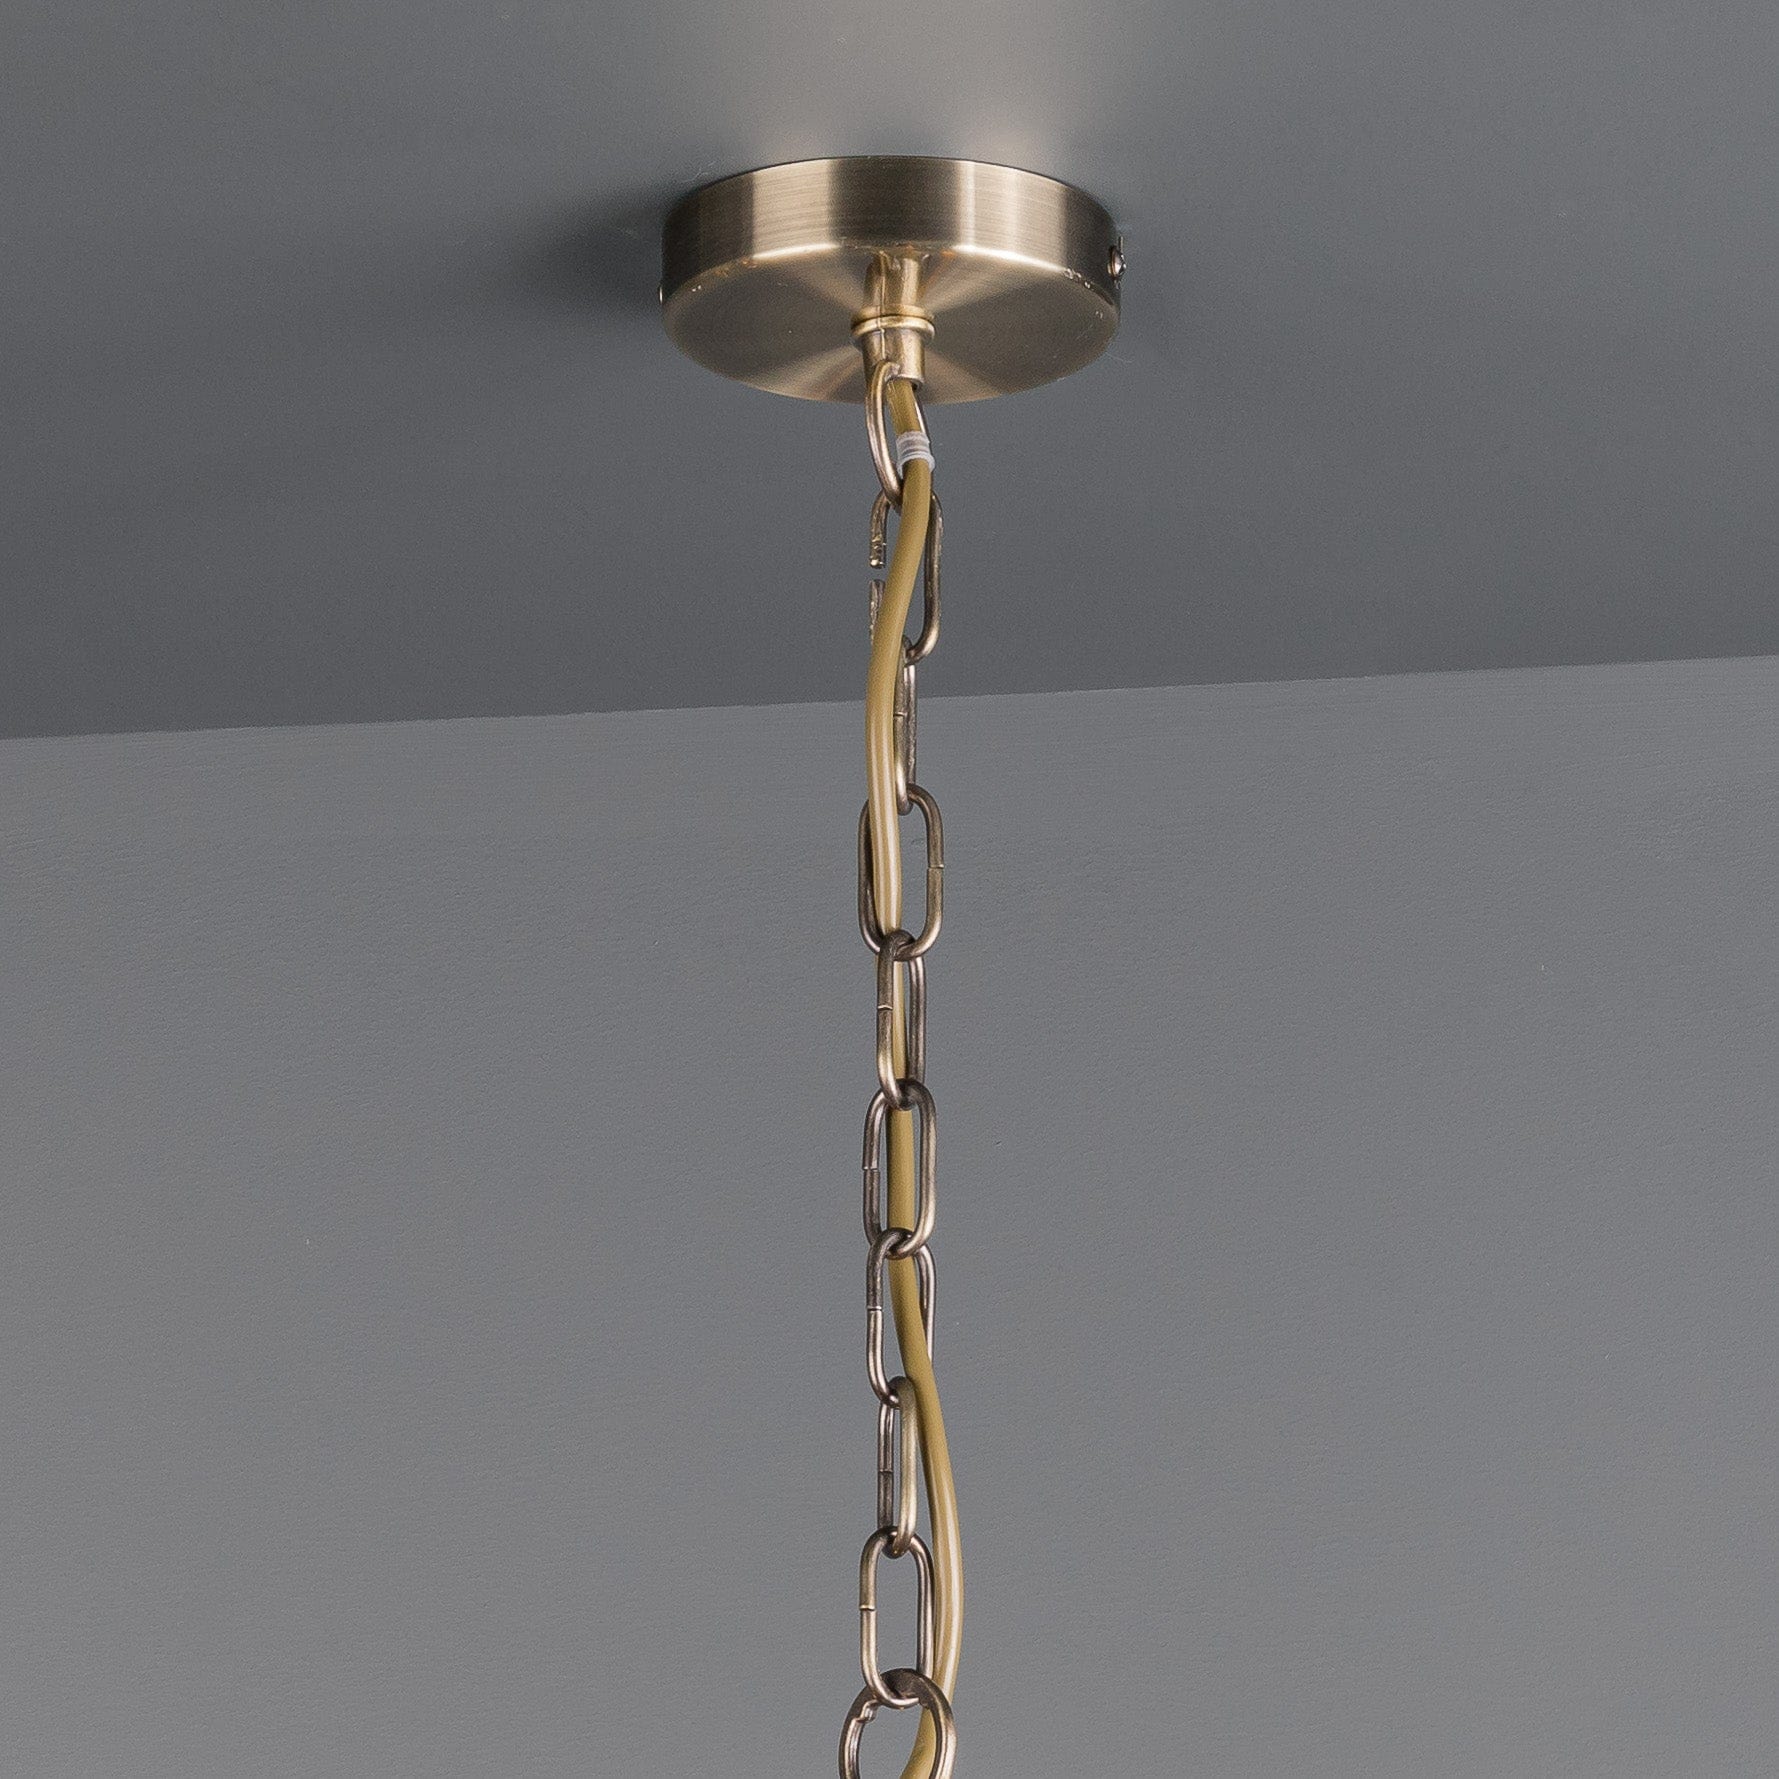 Lights  -  Lyon 5 Light Antique Brass Pendant Ceiling Light  -  60002026